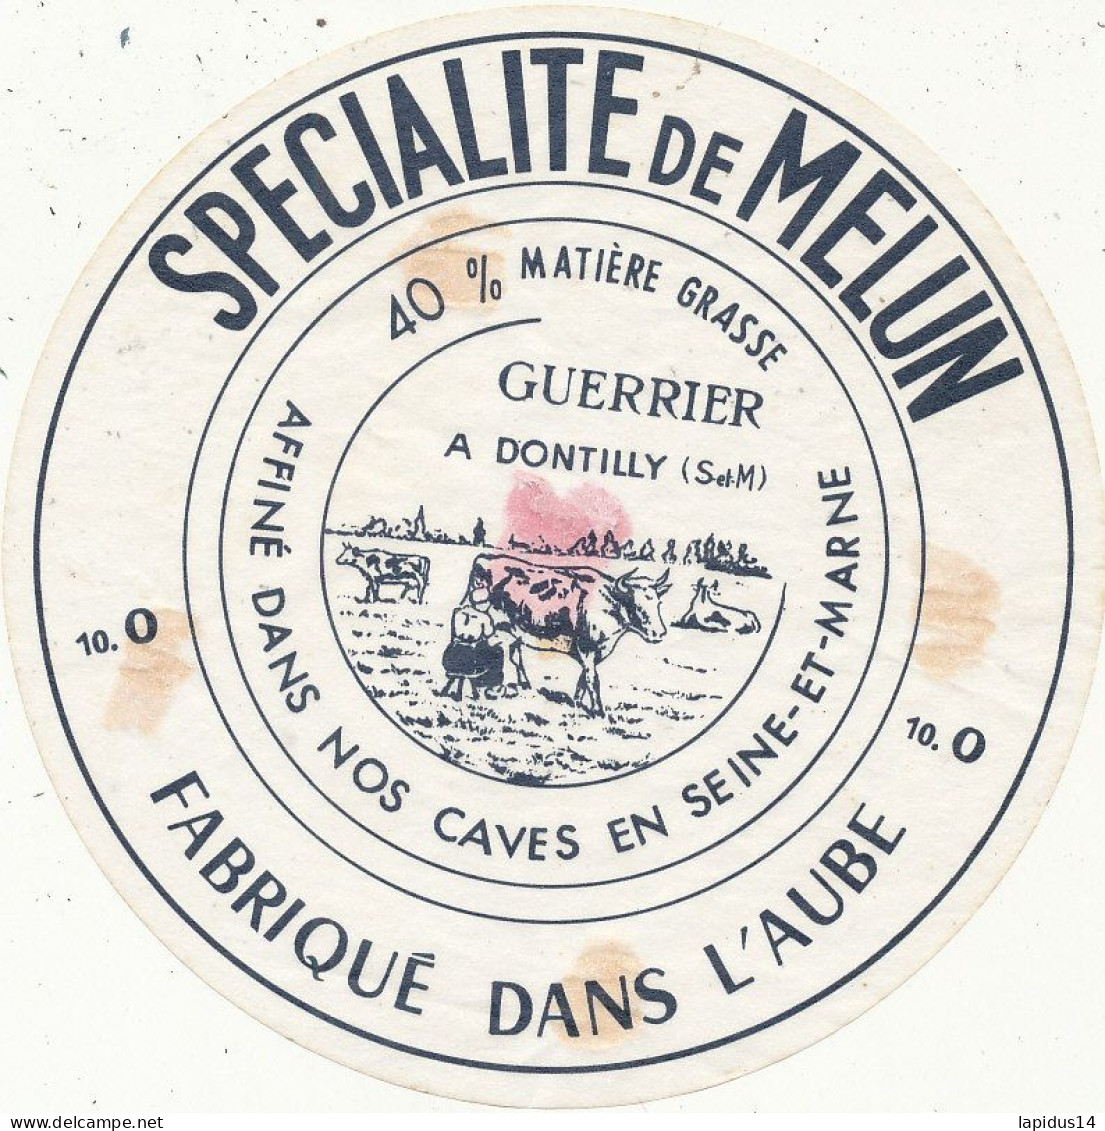 J C O  963 / ETIQUETTE FROMAGE    SPECIALITE DE MEULUN   GUERRIER   A DONTILLY  SEINE ET MARNE - Cheese